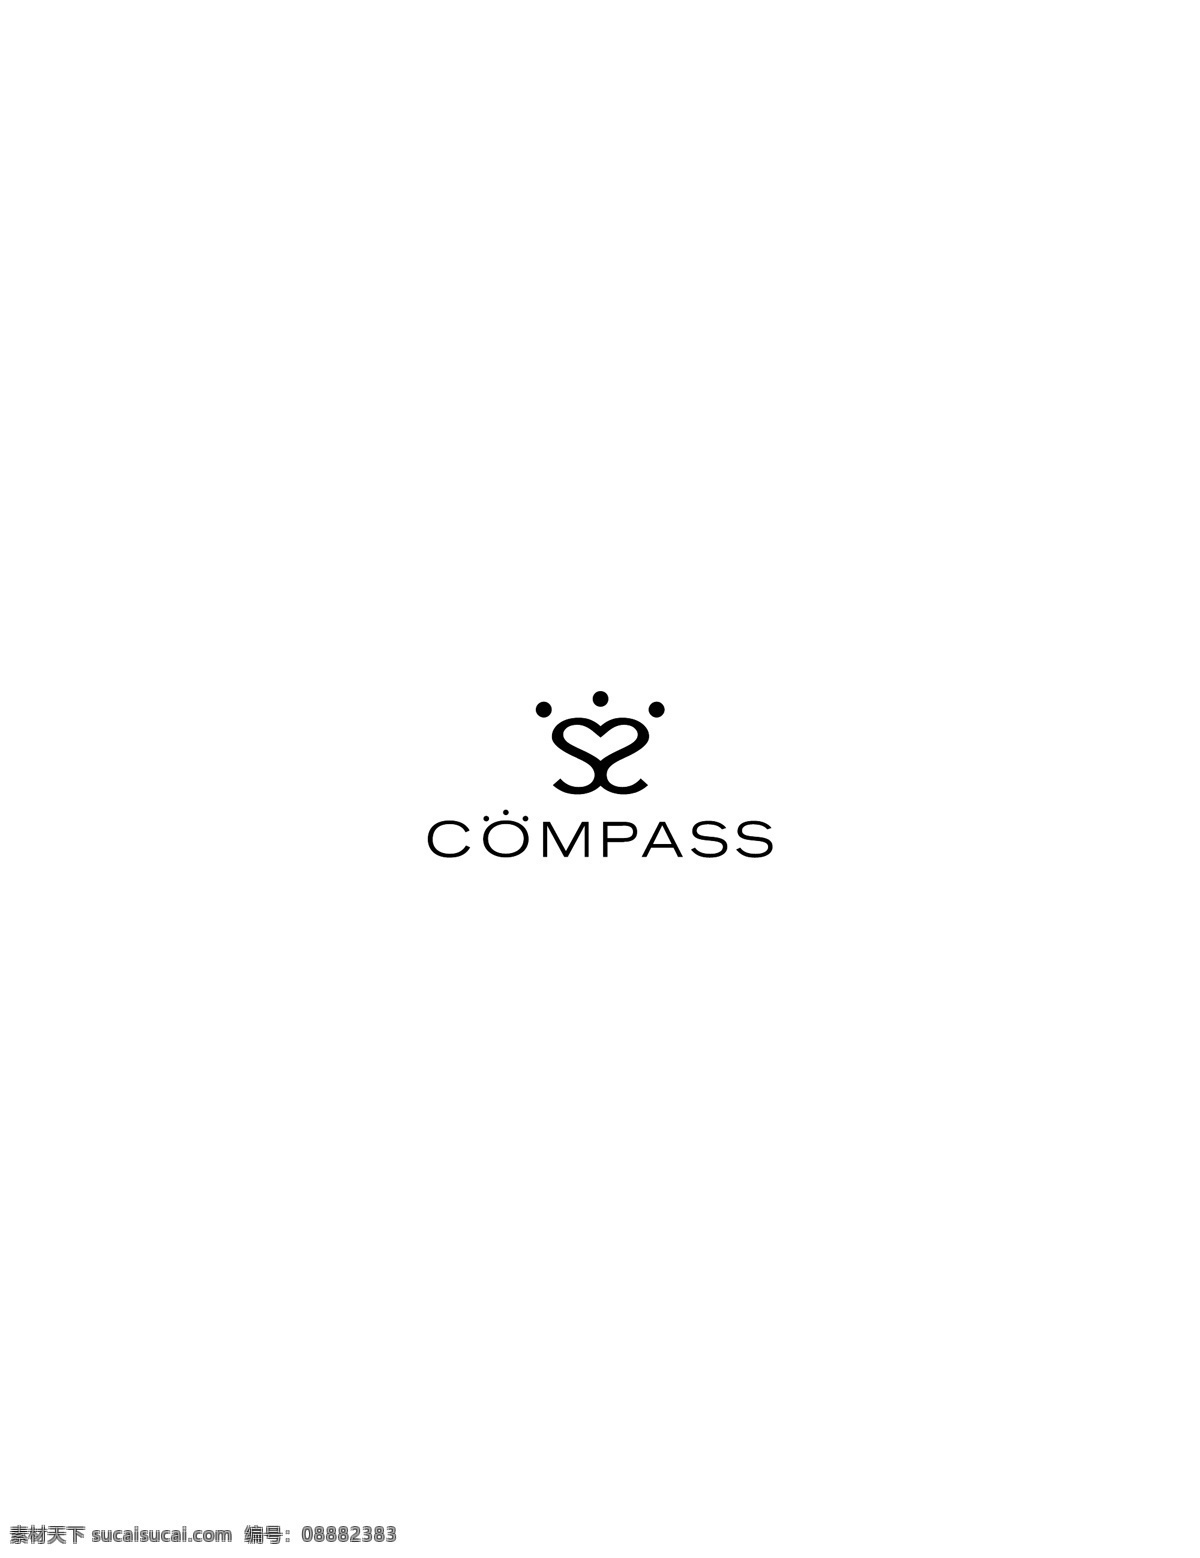 compass logo大全 logo 设计欣赏 商业矢量 矢量下载 服饰 品牌 标志 标志设计 欣赏 网页矢量 矢量图 其他矢量图